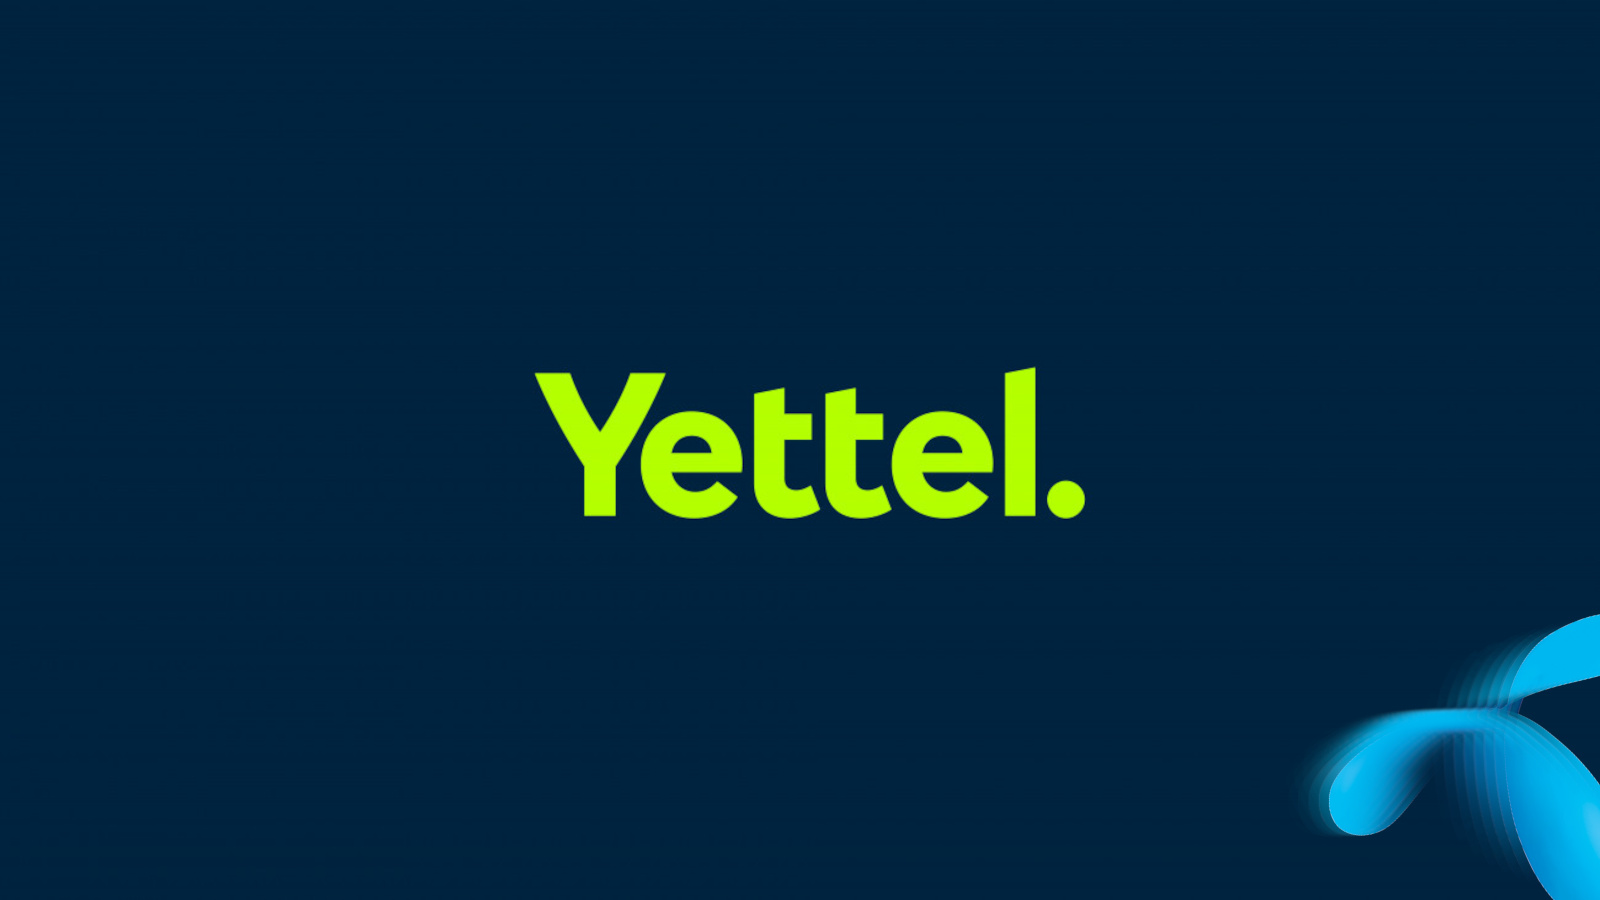 Viszlt Telenor, hello Yettel.